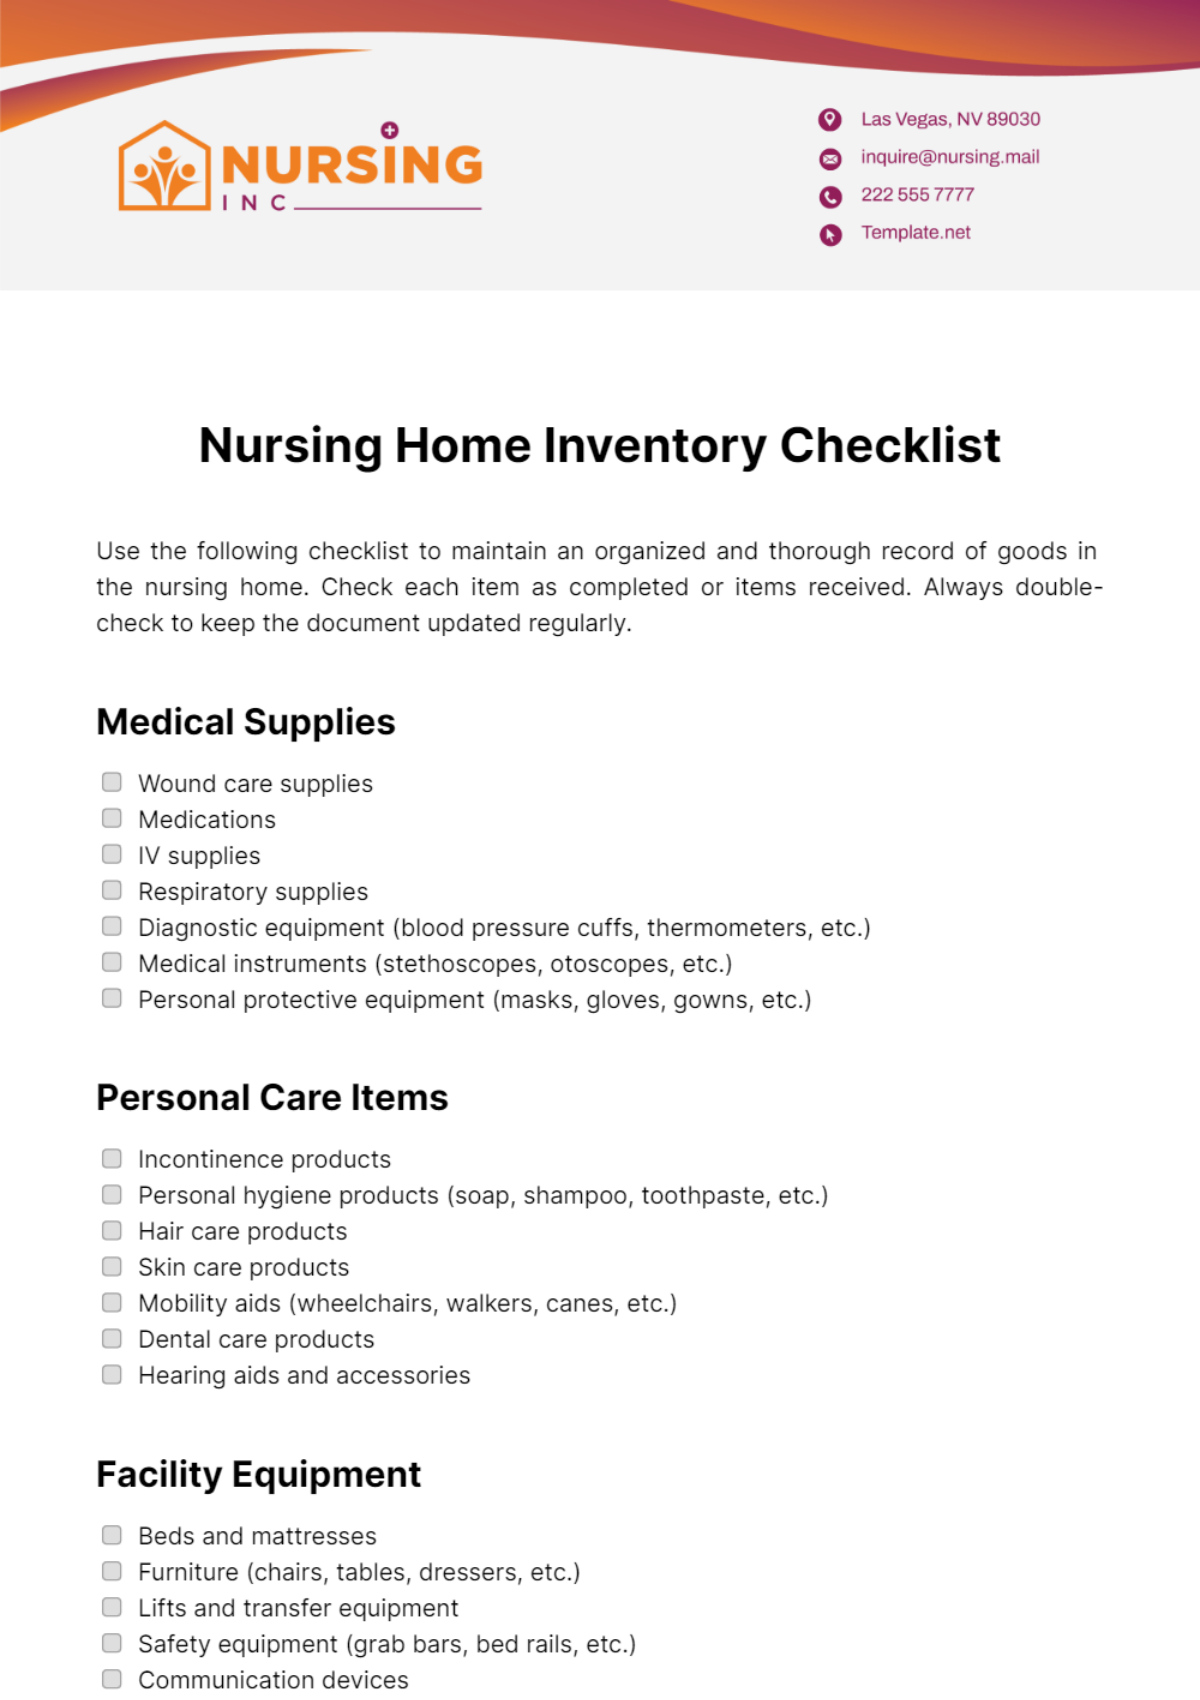 Nursing Home Inventory Checklist Template